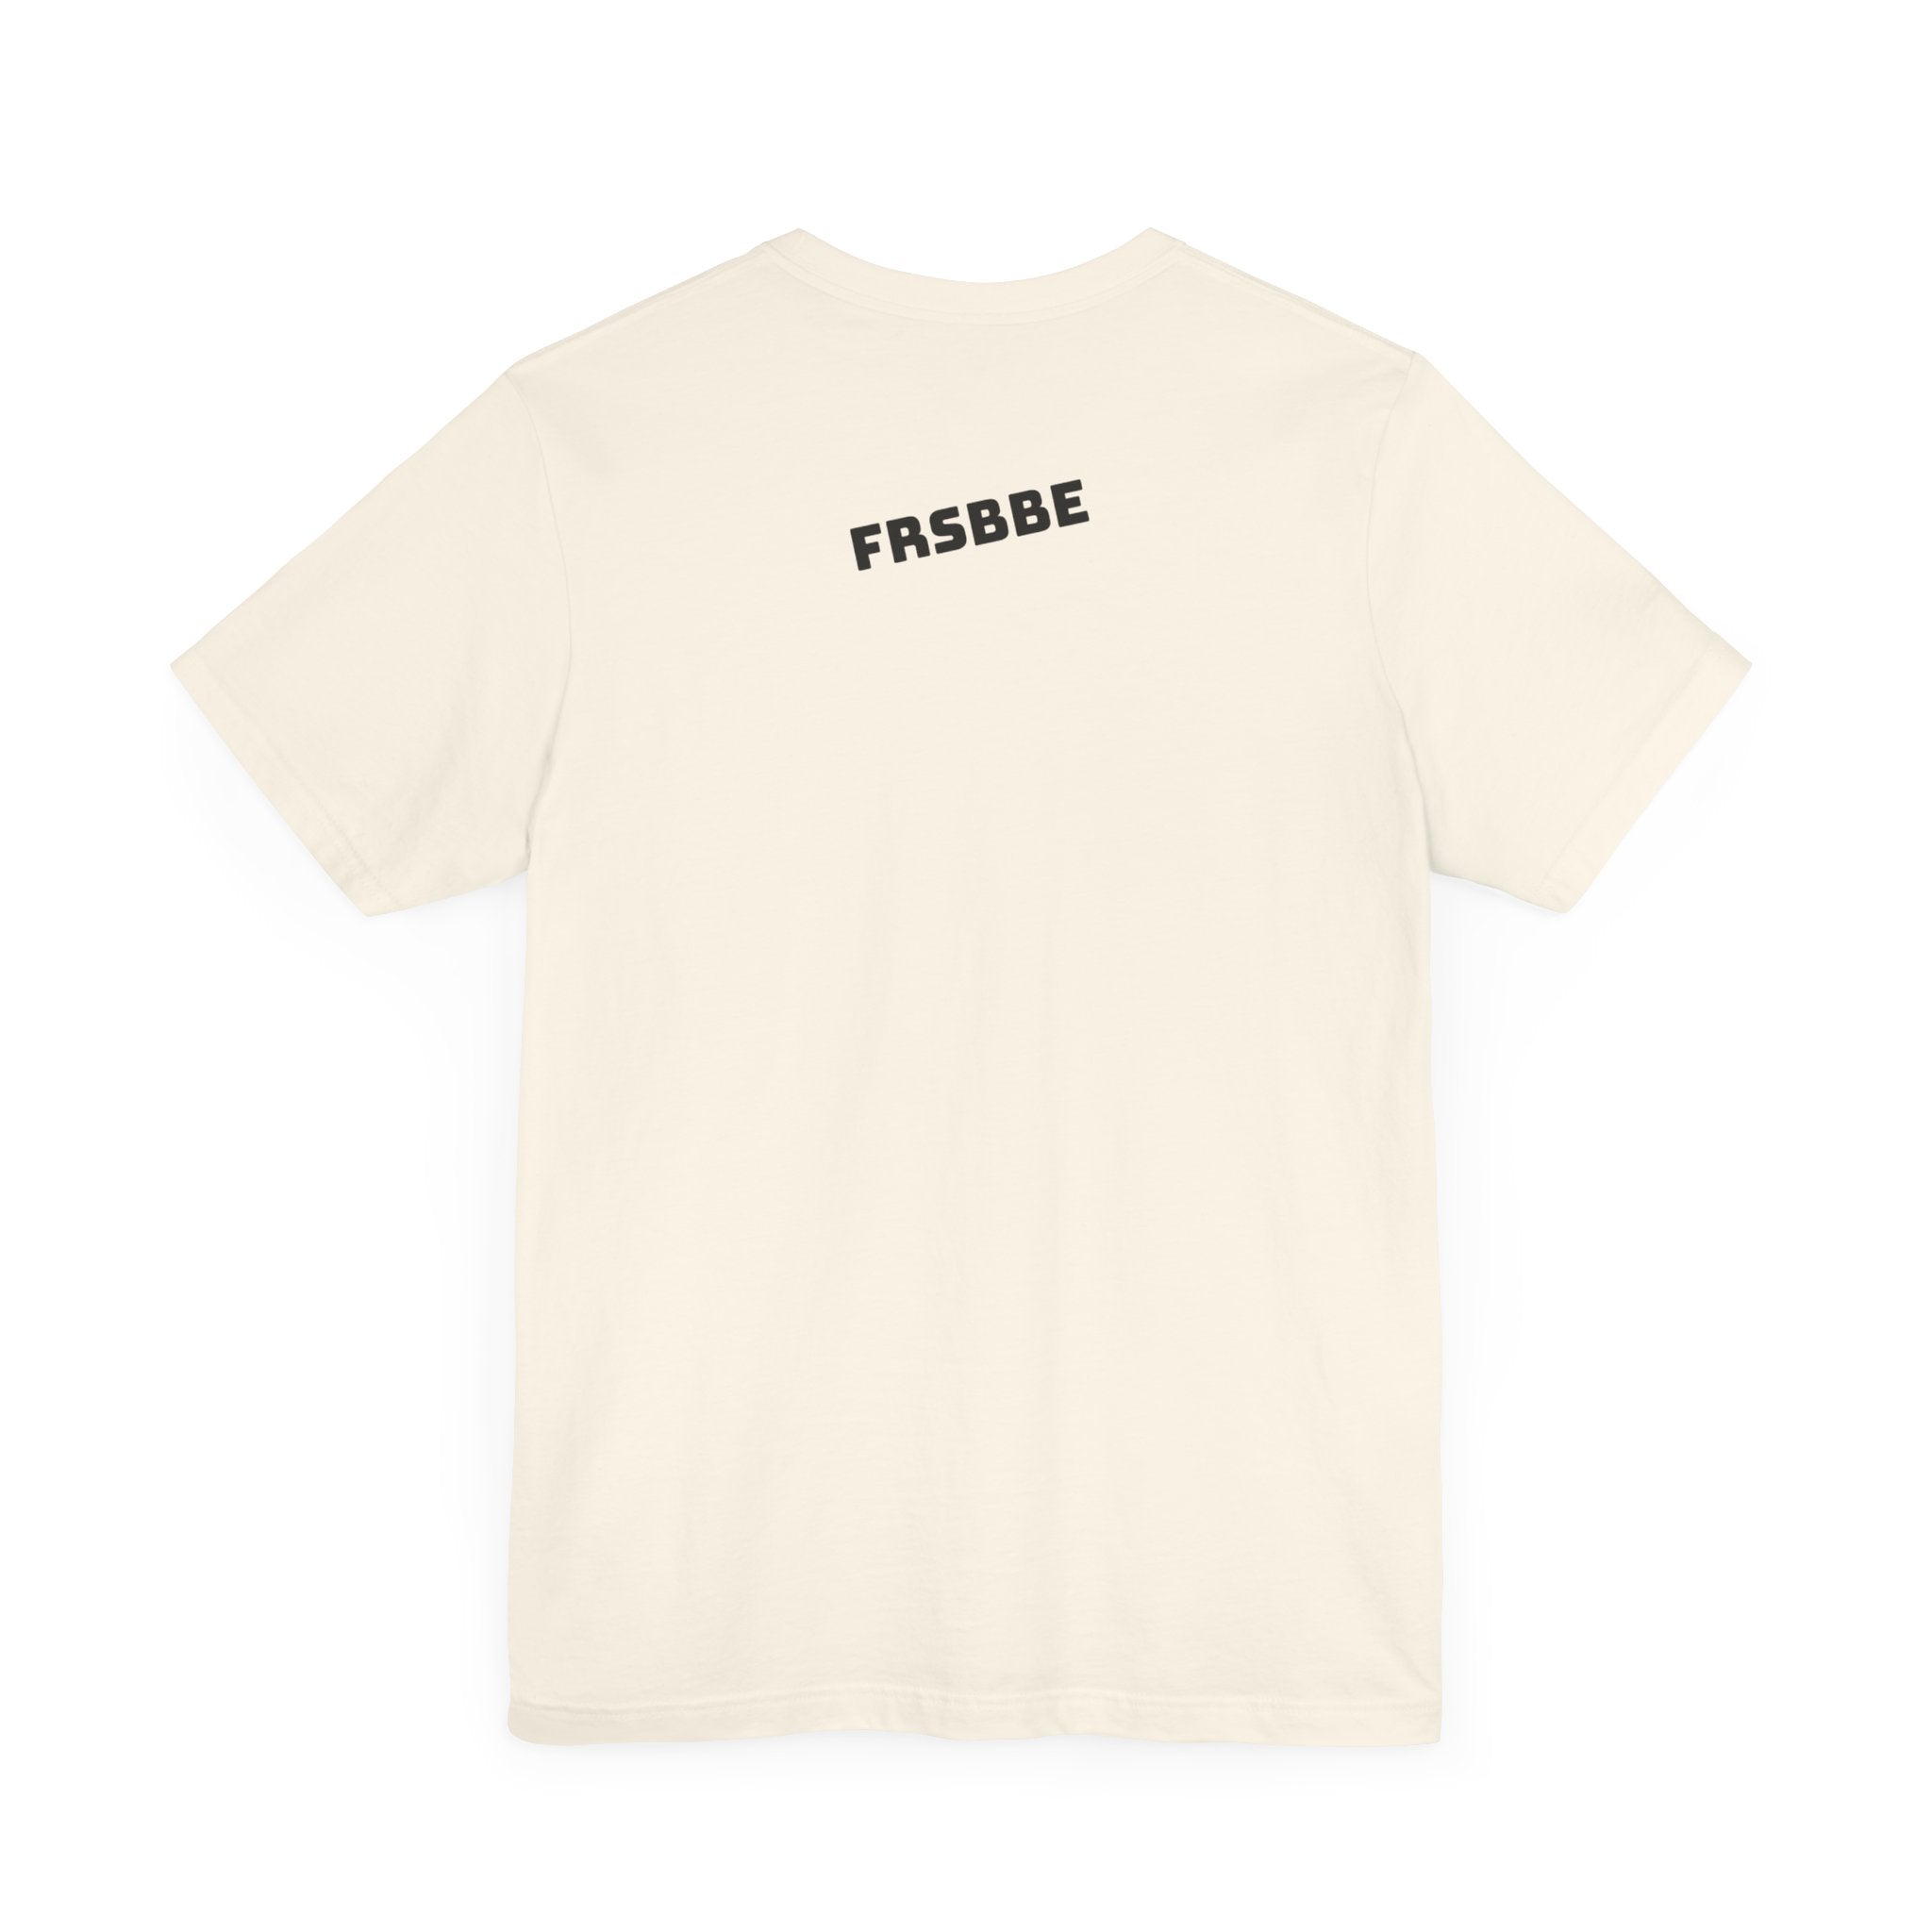 FRSBBE RECORDS Unisex Short Sleeve Tee - gottogetit prod.